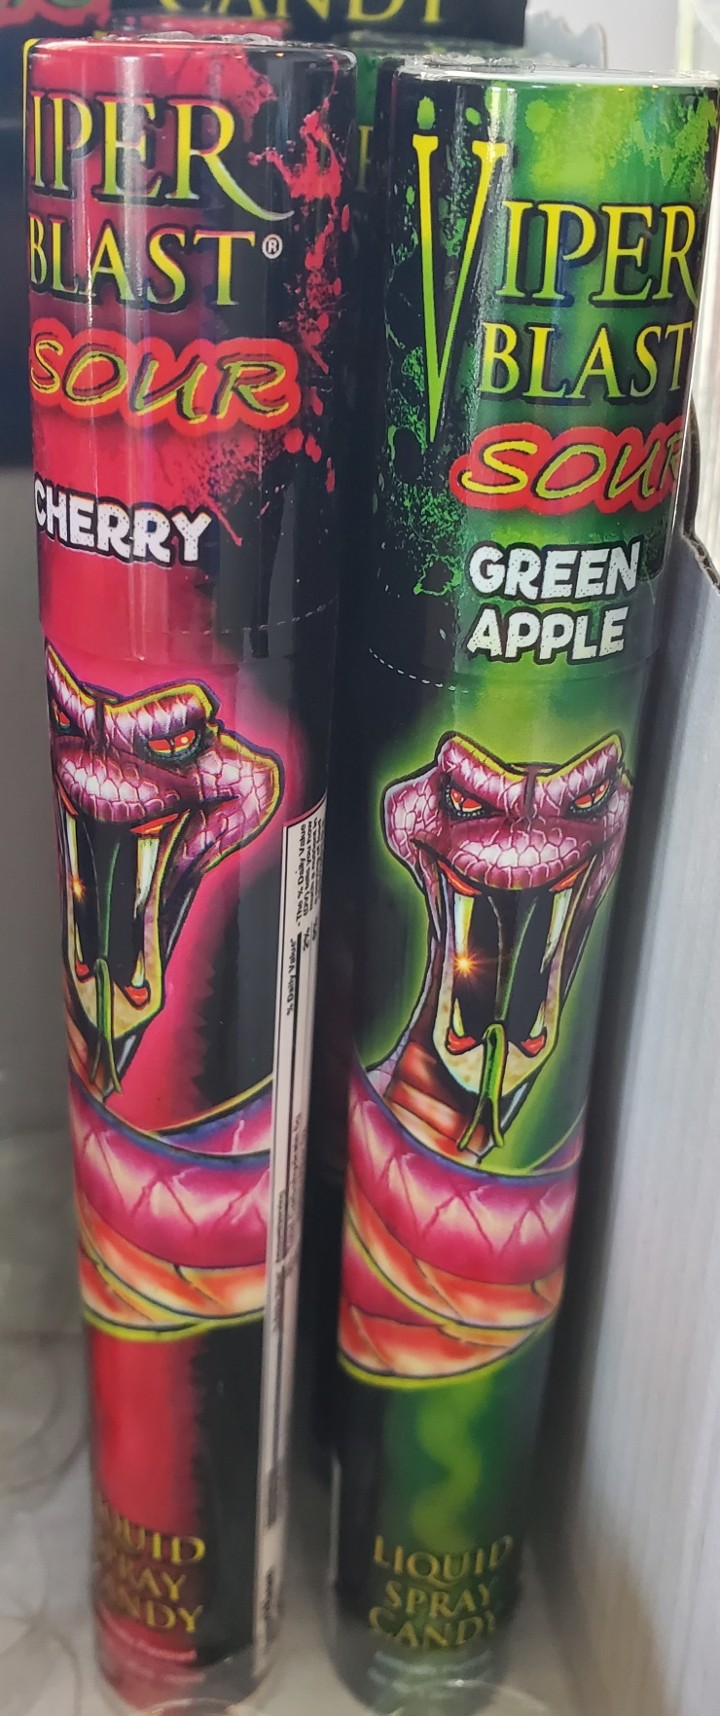 Viper Blast Spray Candy